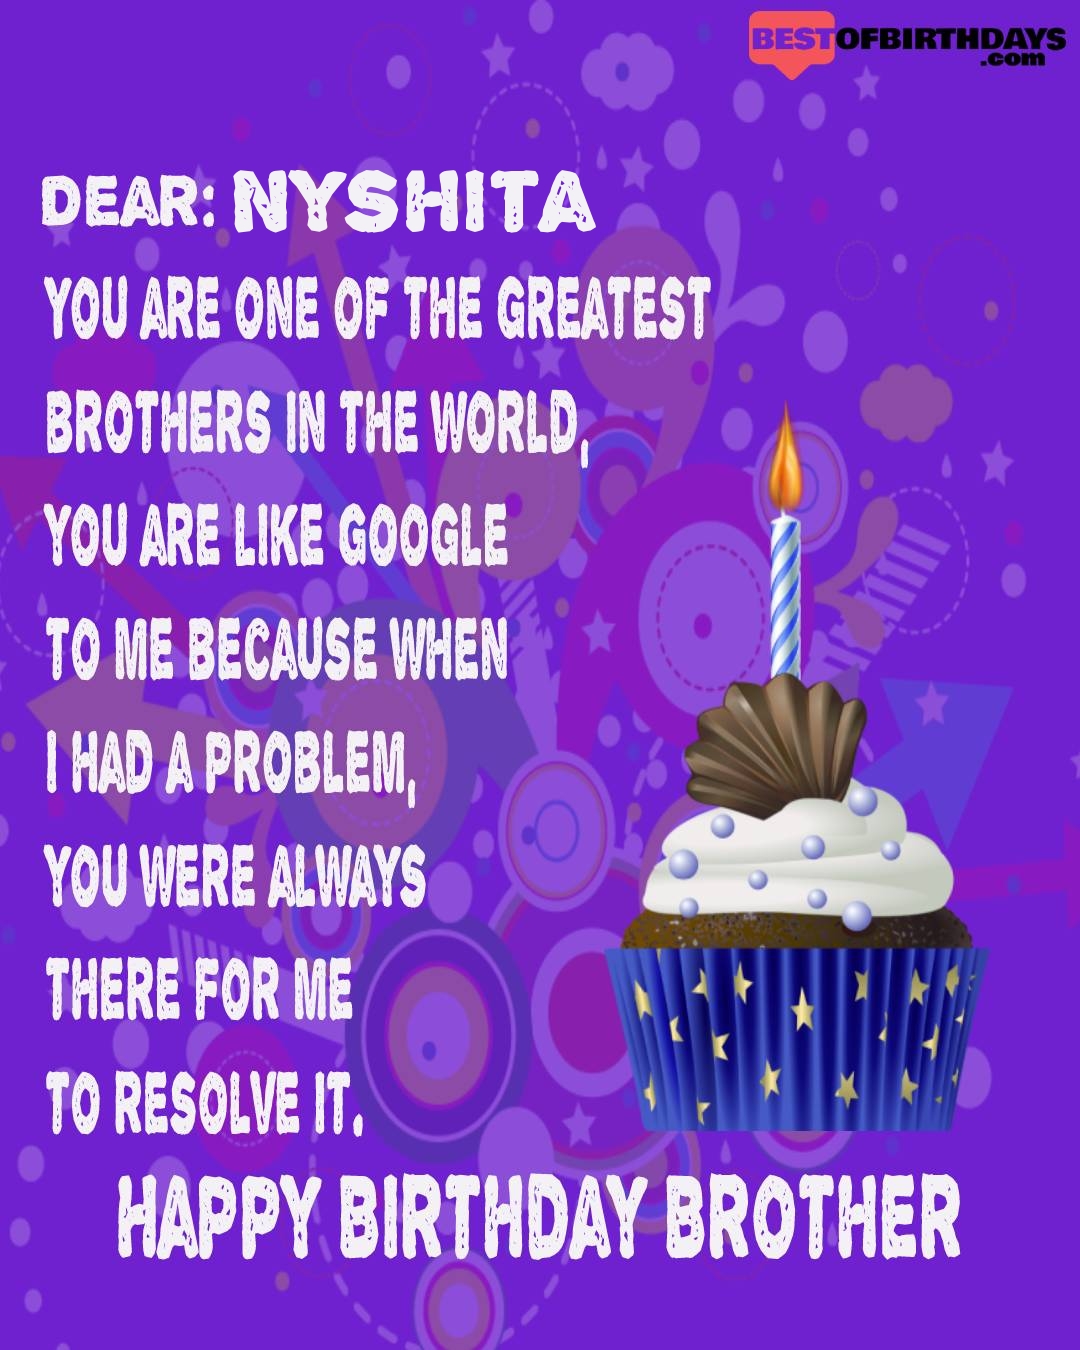 Happy birthday nyshita bhai brother bro